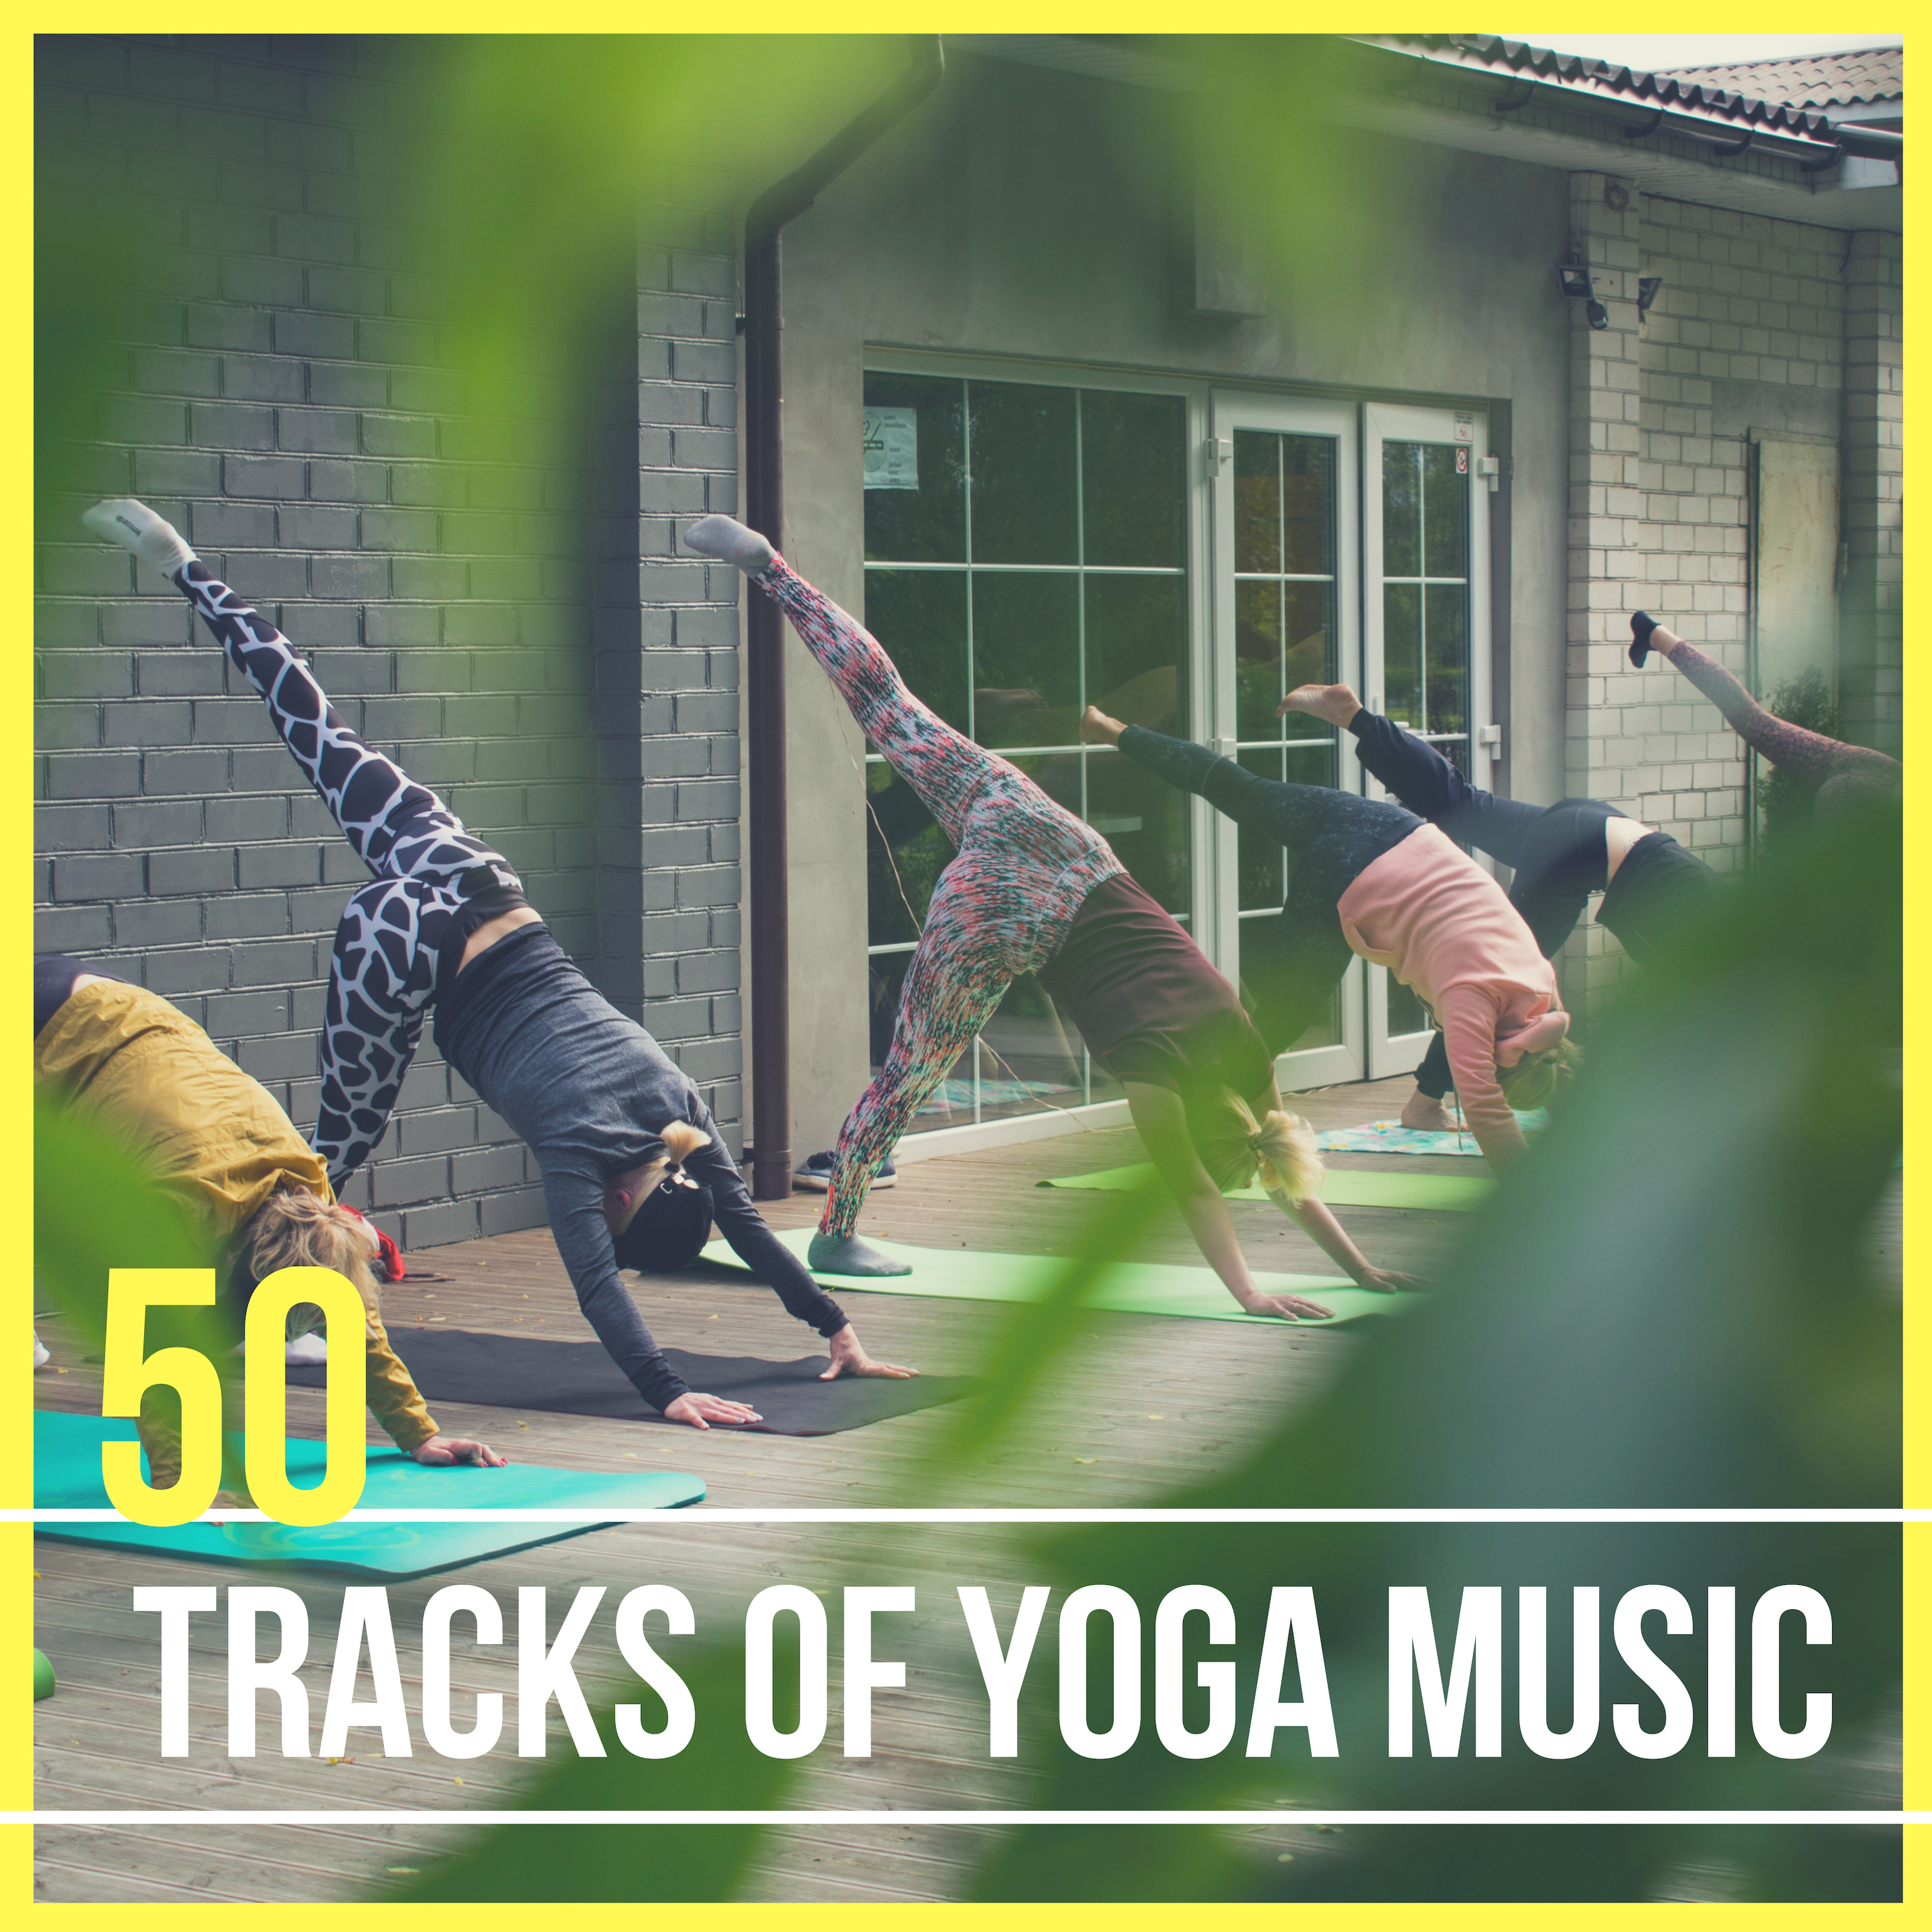 50 Tracks of Yoga Music